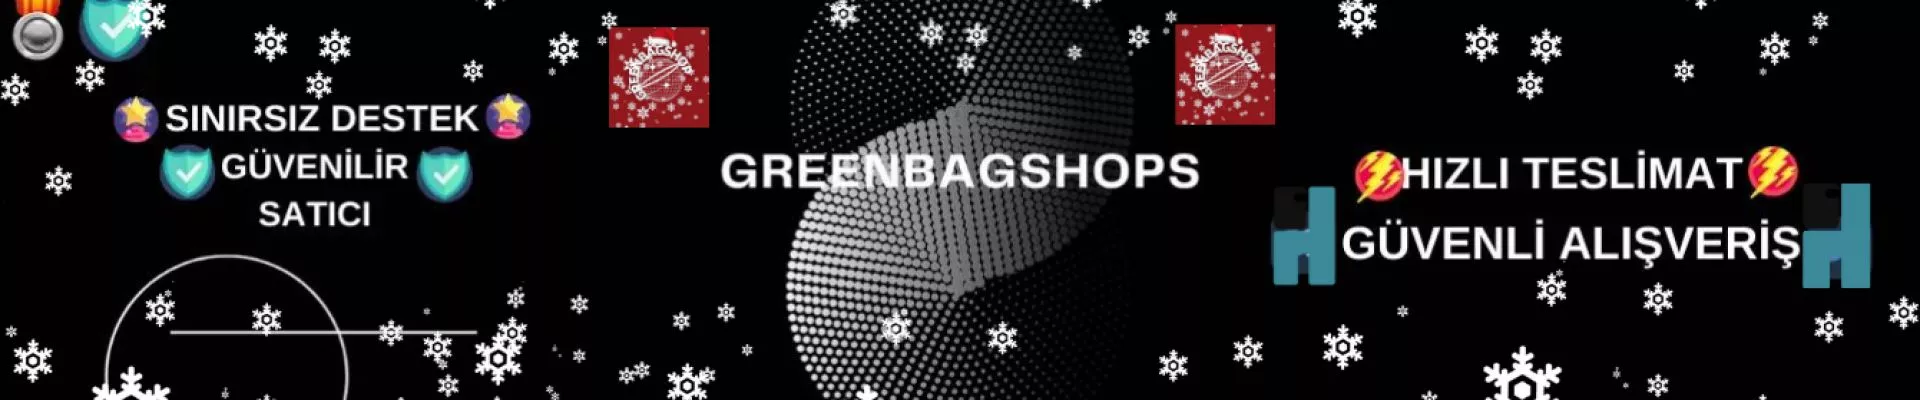 GreenBagShop kapak fotoğrafı